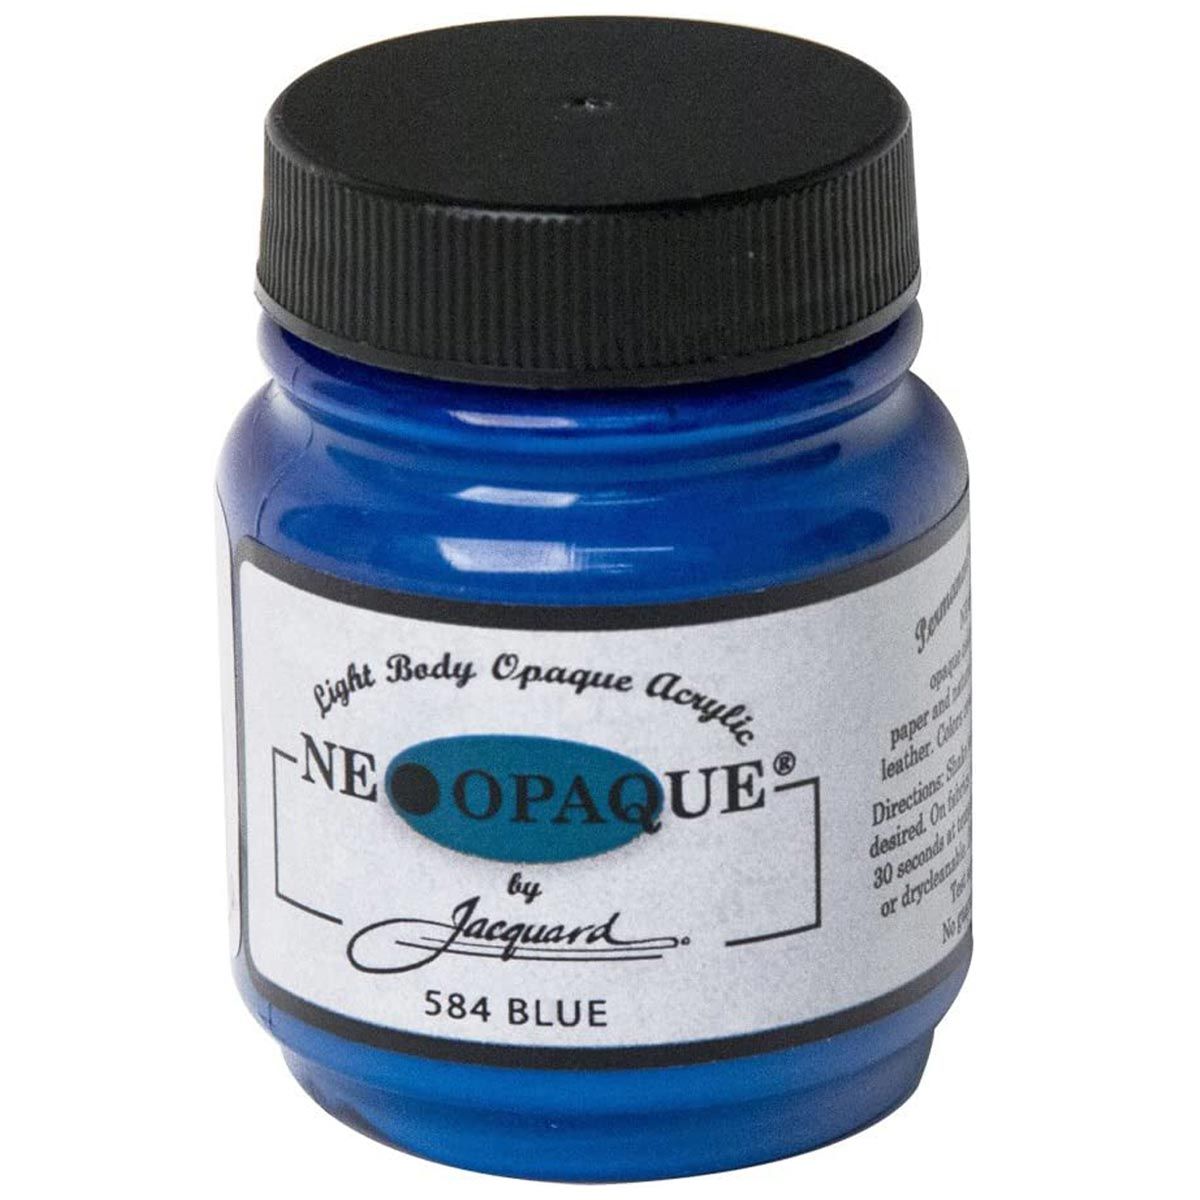 Jacquard Neopaque Acrylic 584 Blue 2.25 oz